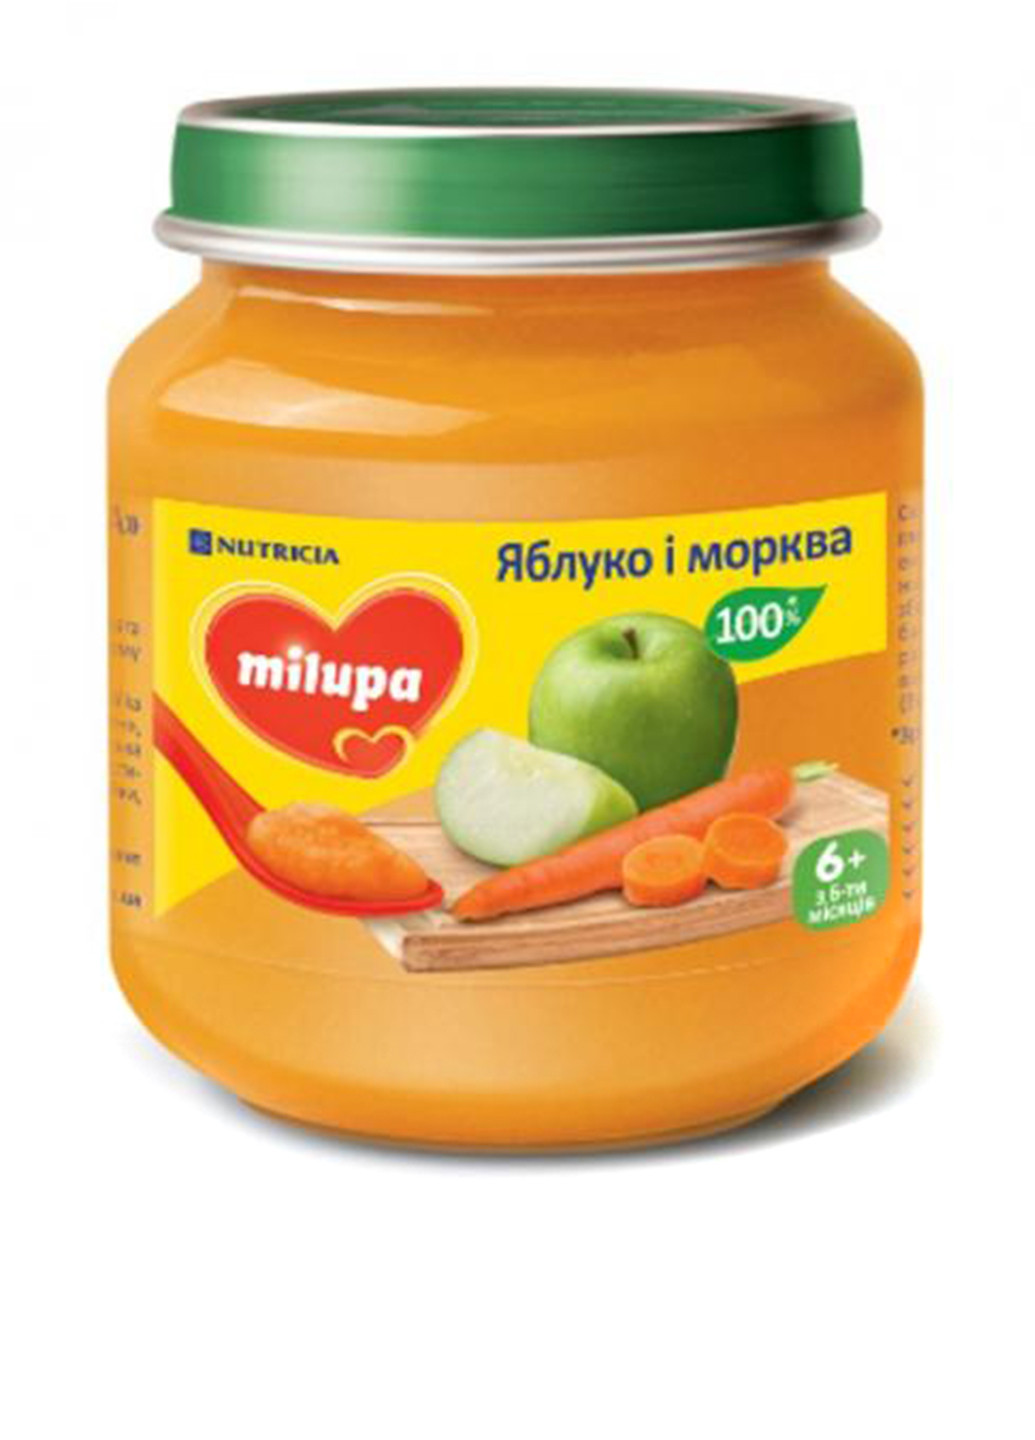 Пюре фруктове яблуко і моркву, 125 г Milupa (131224538)